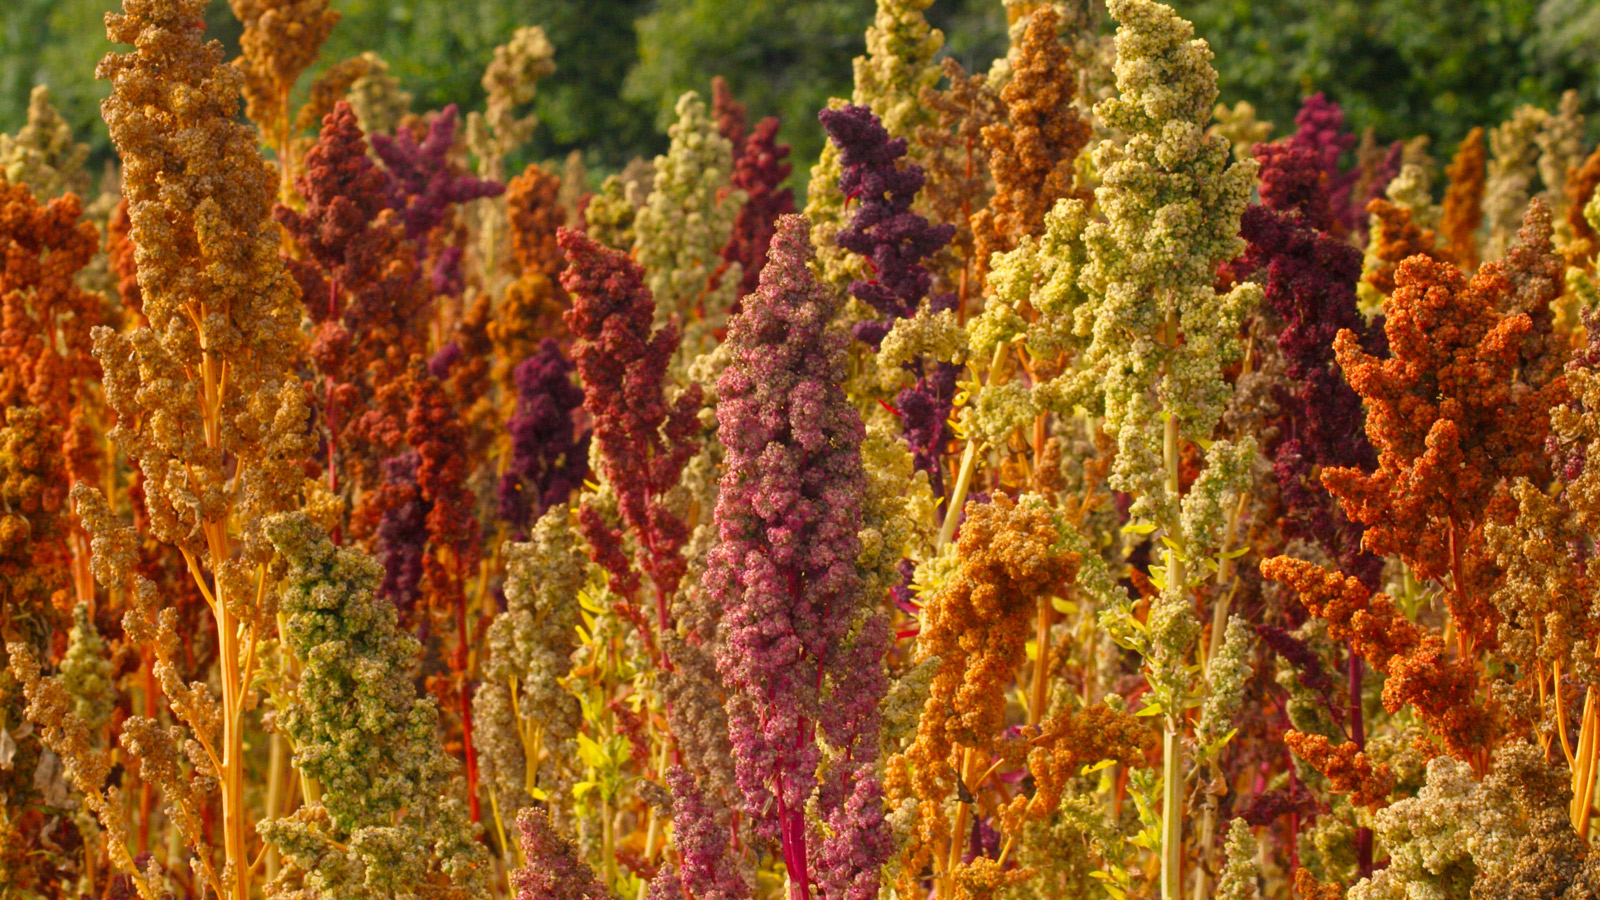 Image of sunflowers quinoa companion plant